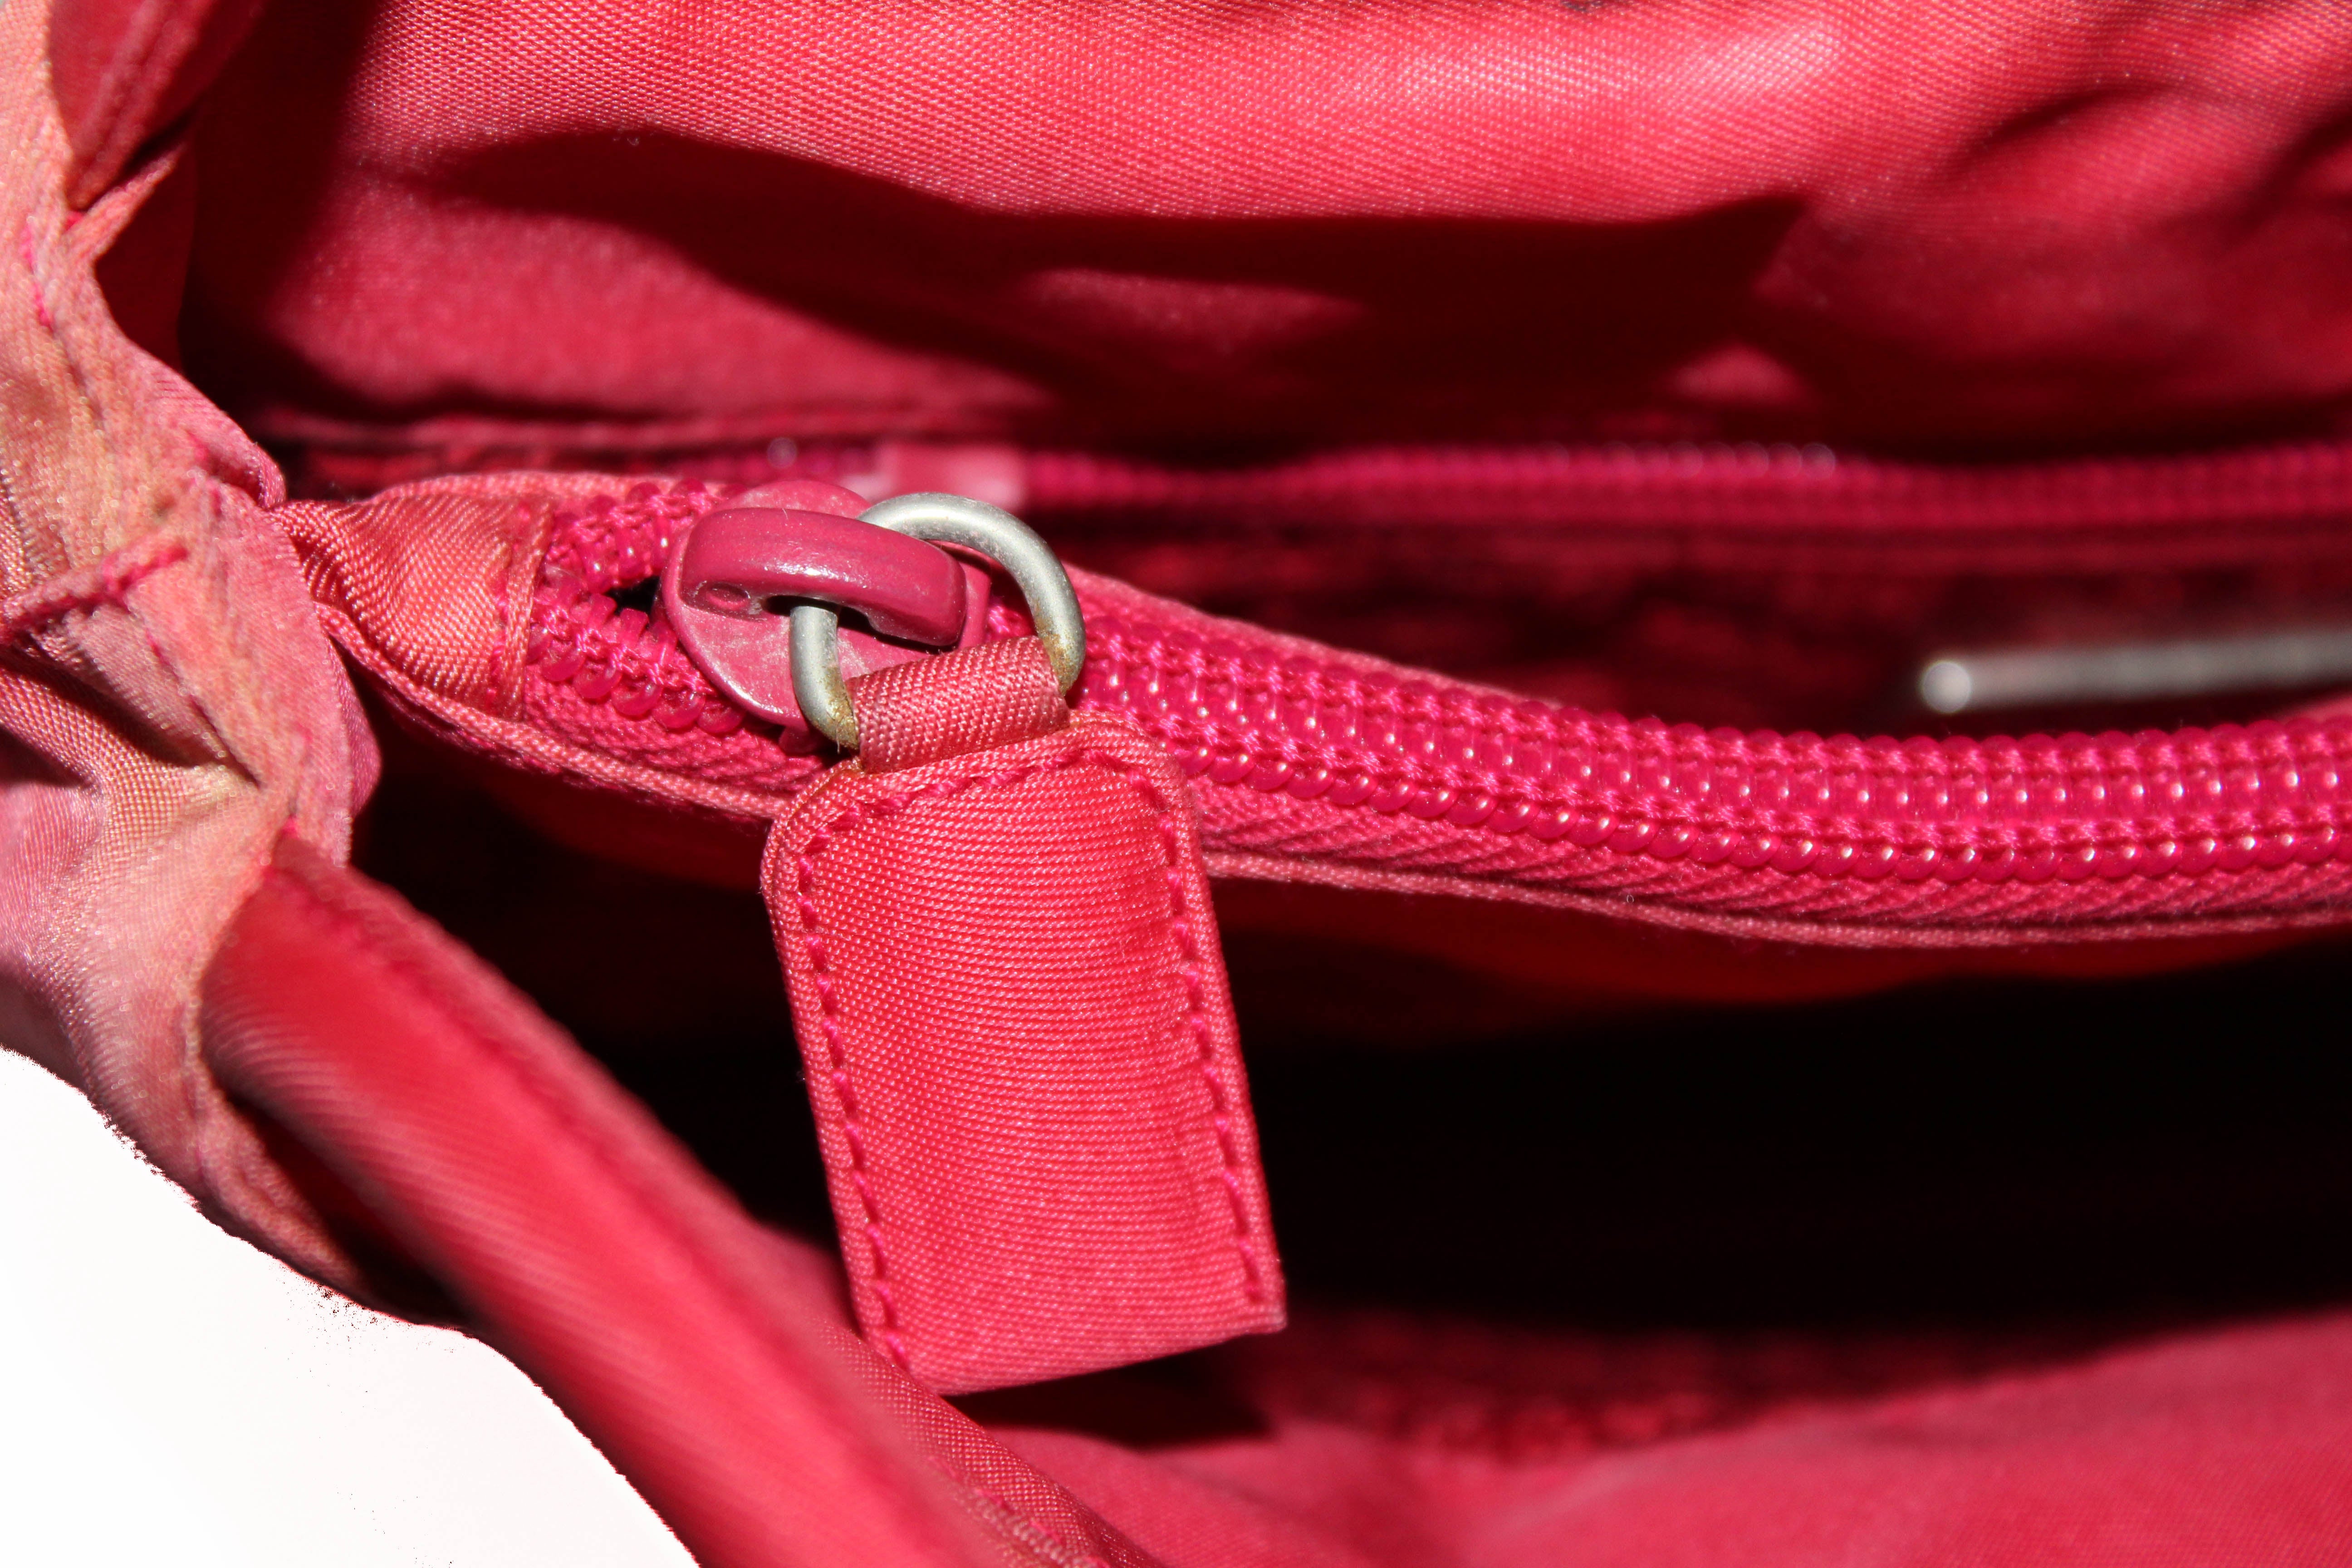 Authentic Prada Red Nylon Small Shoulder Bag